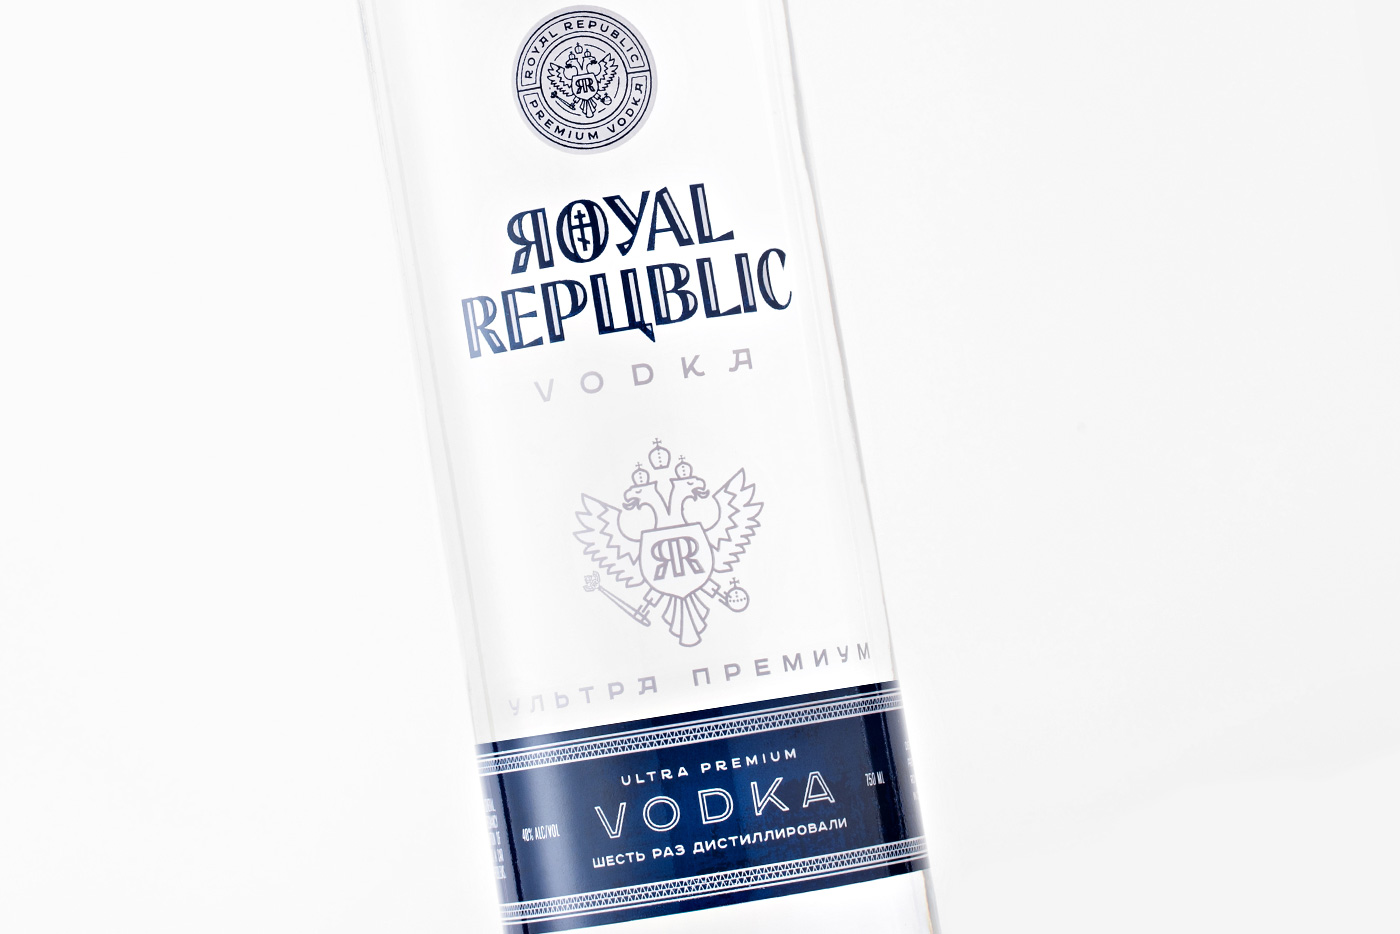 Royal Republic Vodka Front Cover